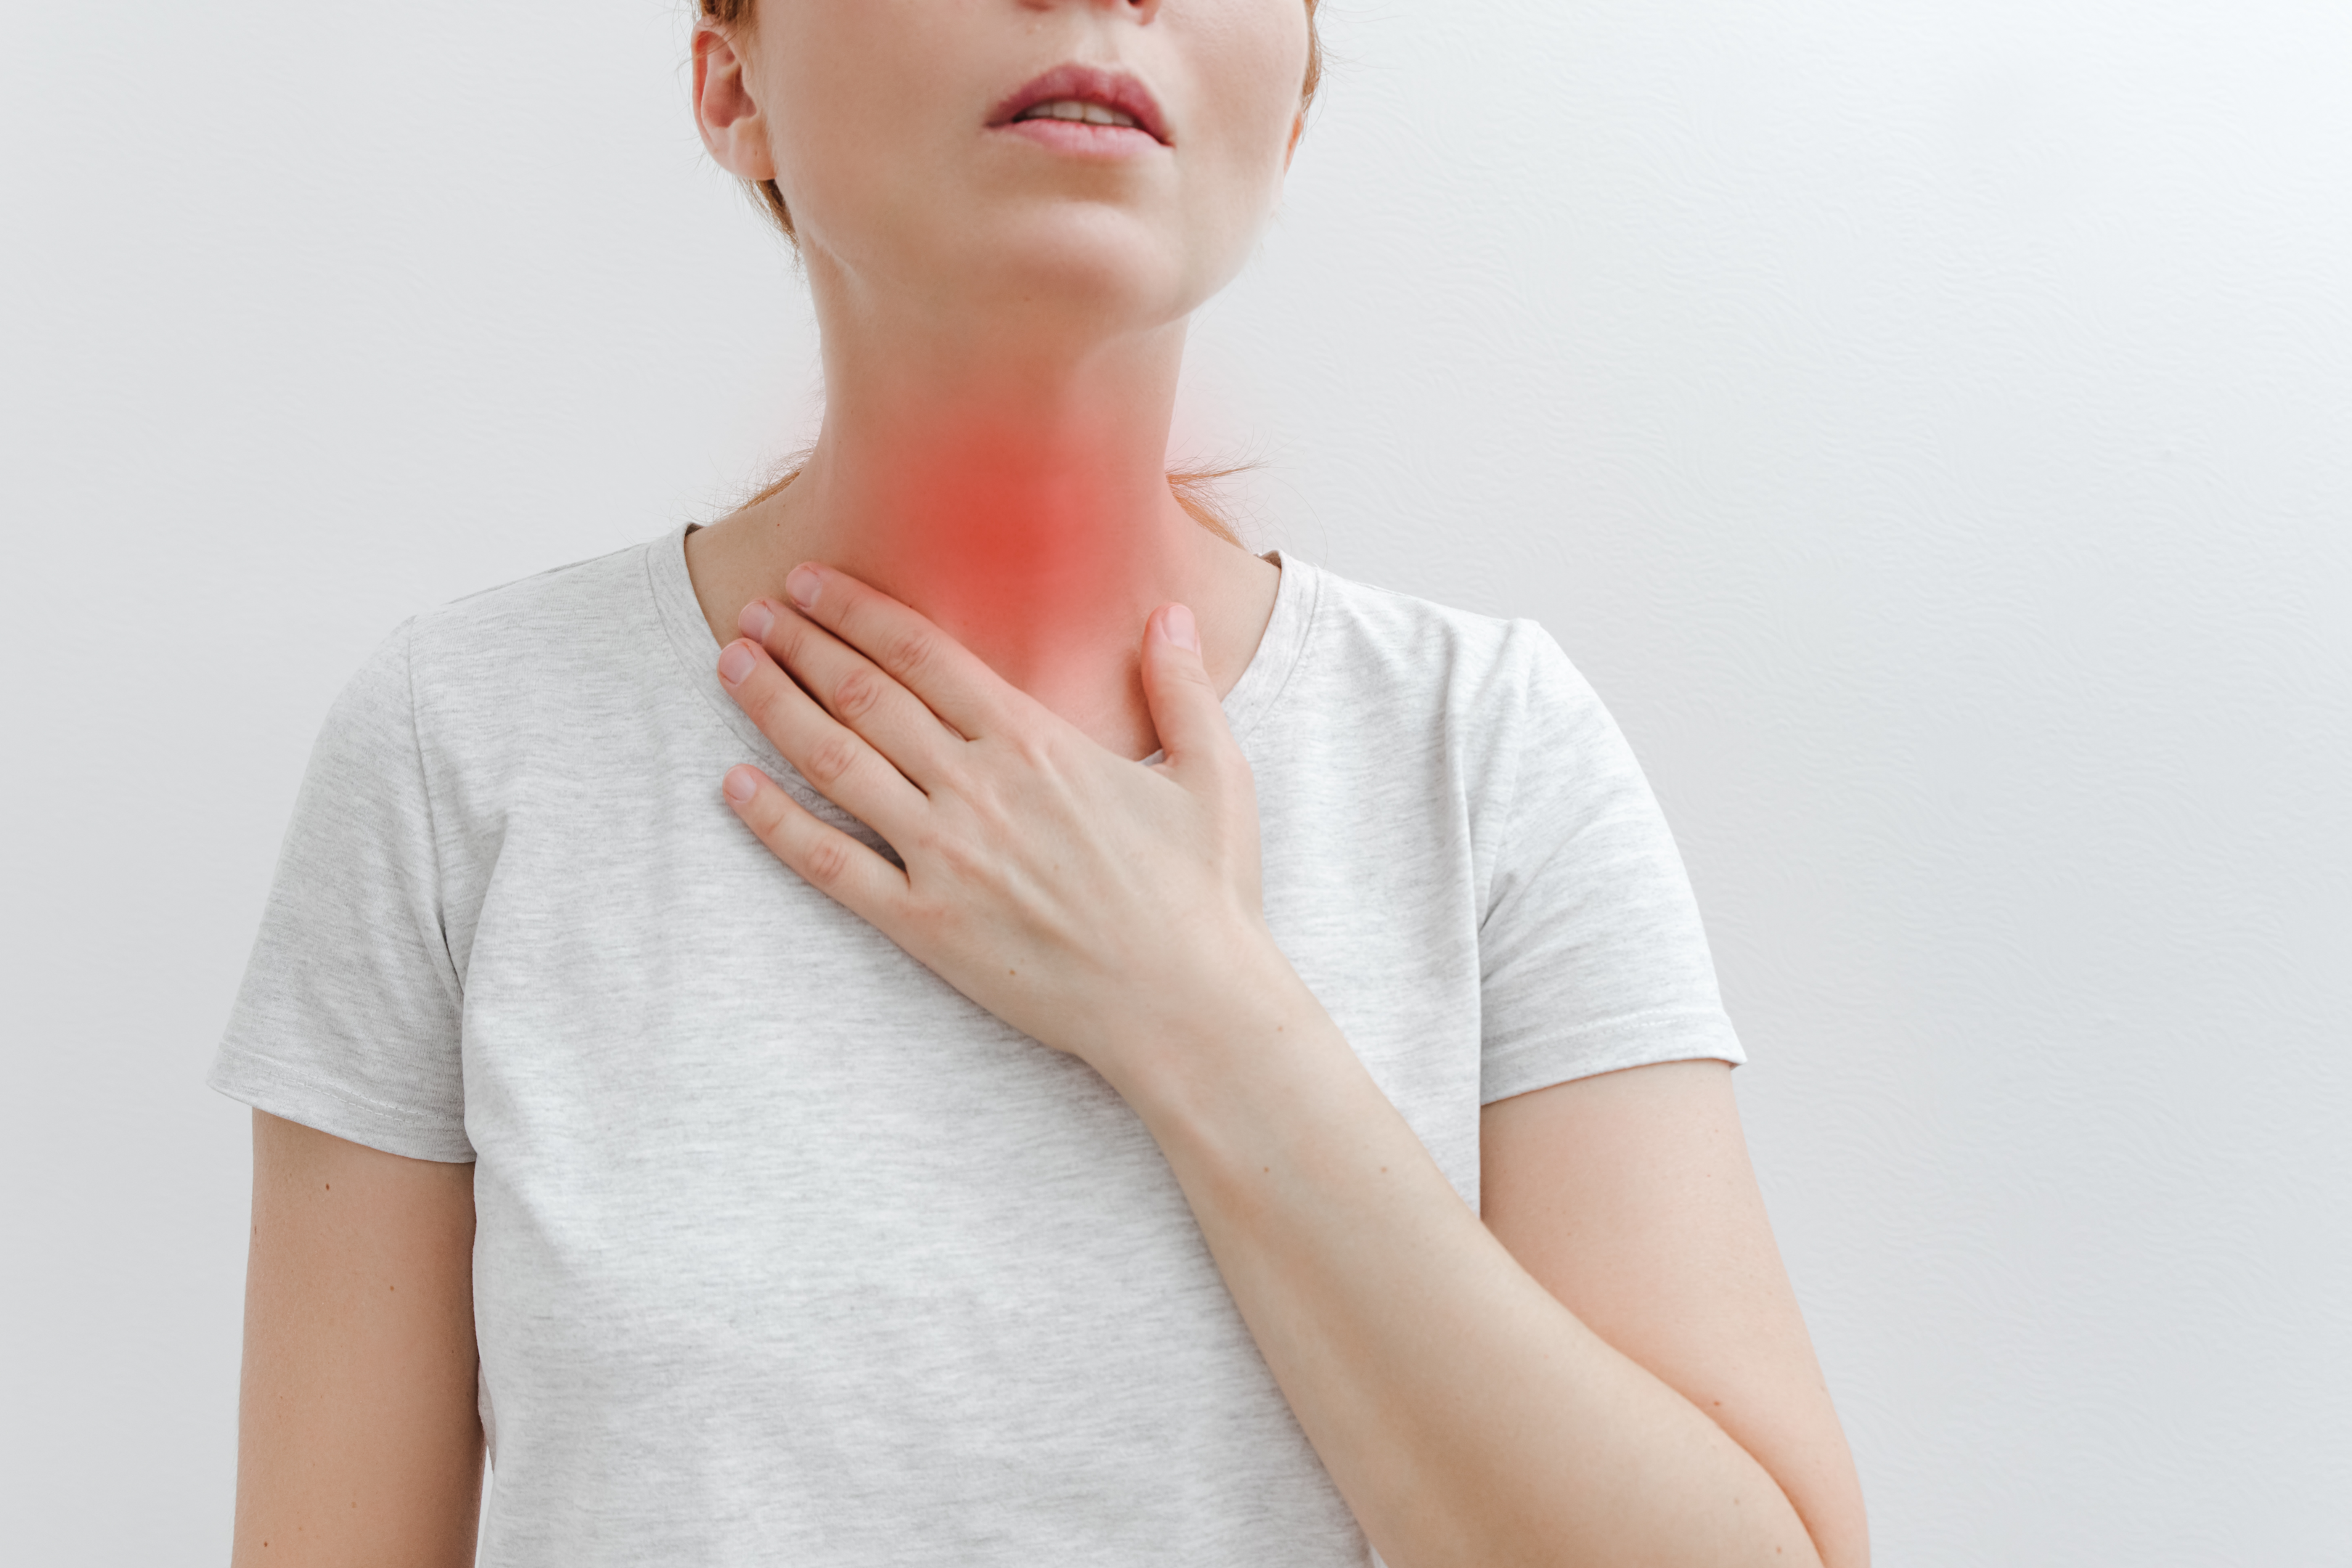 Thyroid issues can also cause bowel disturbances.